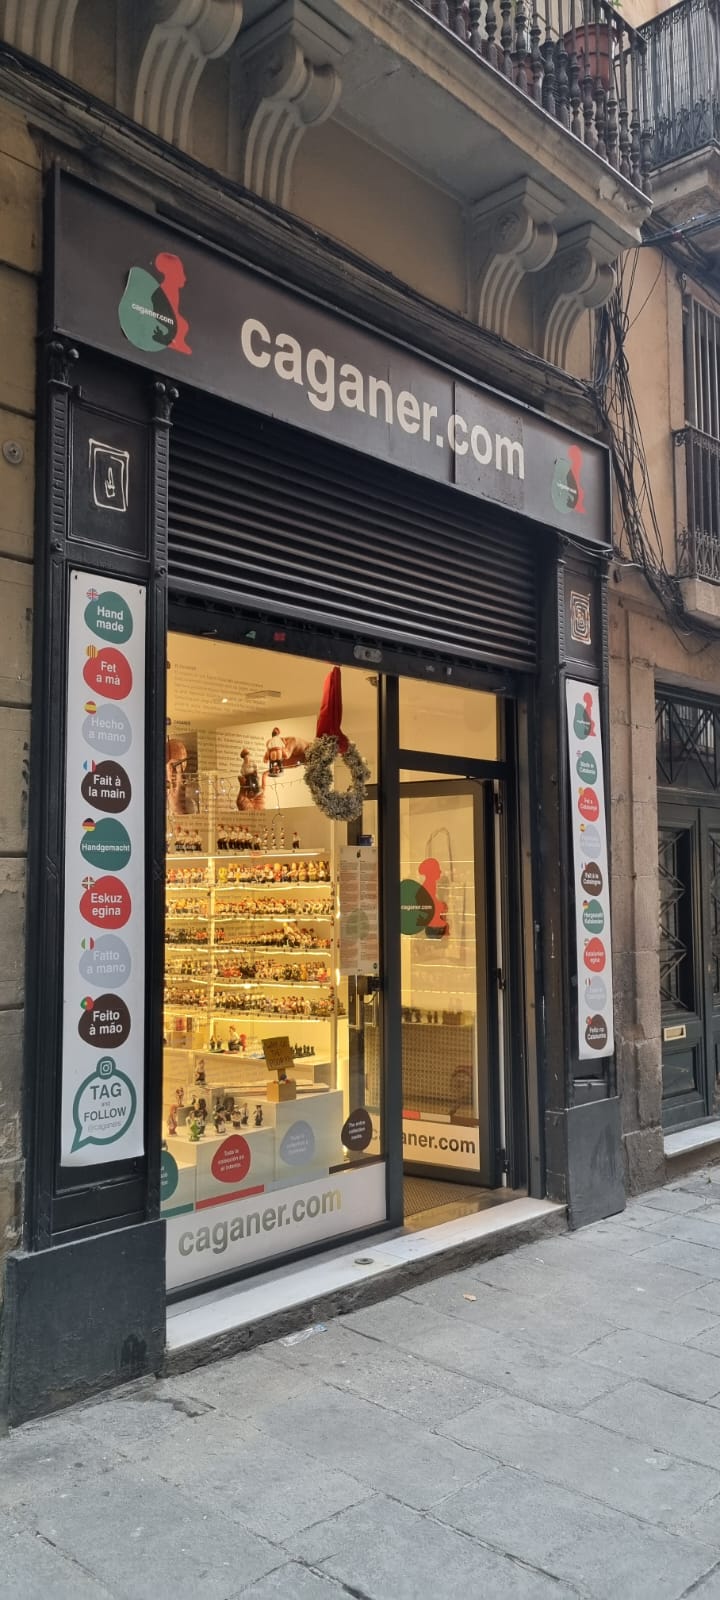 Barcellona: negozio caganer